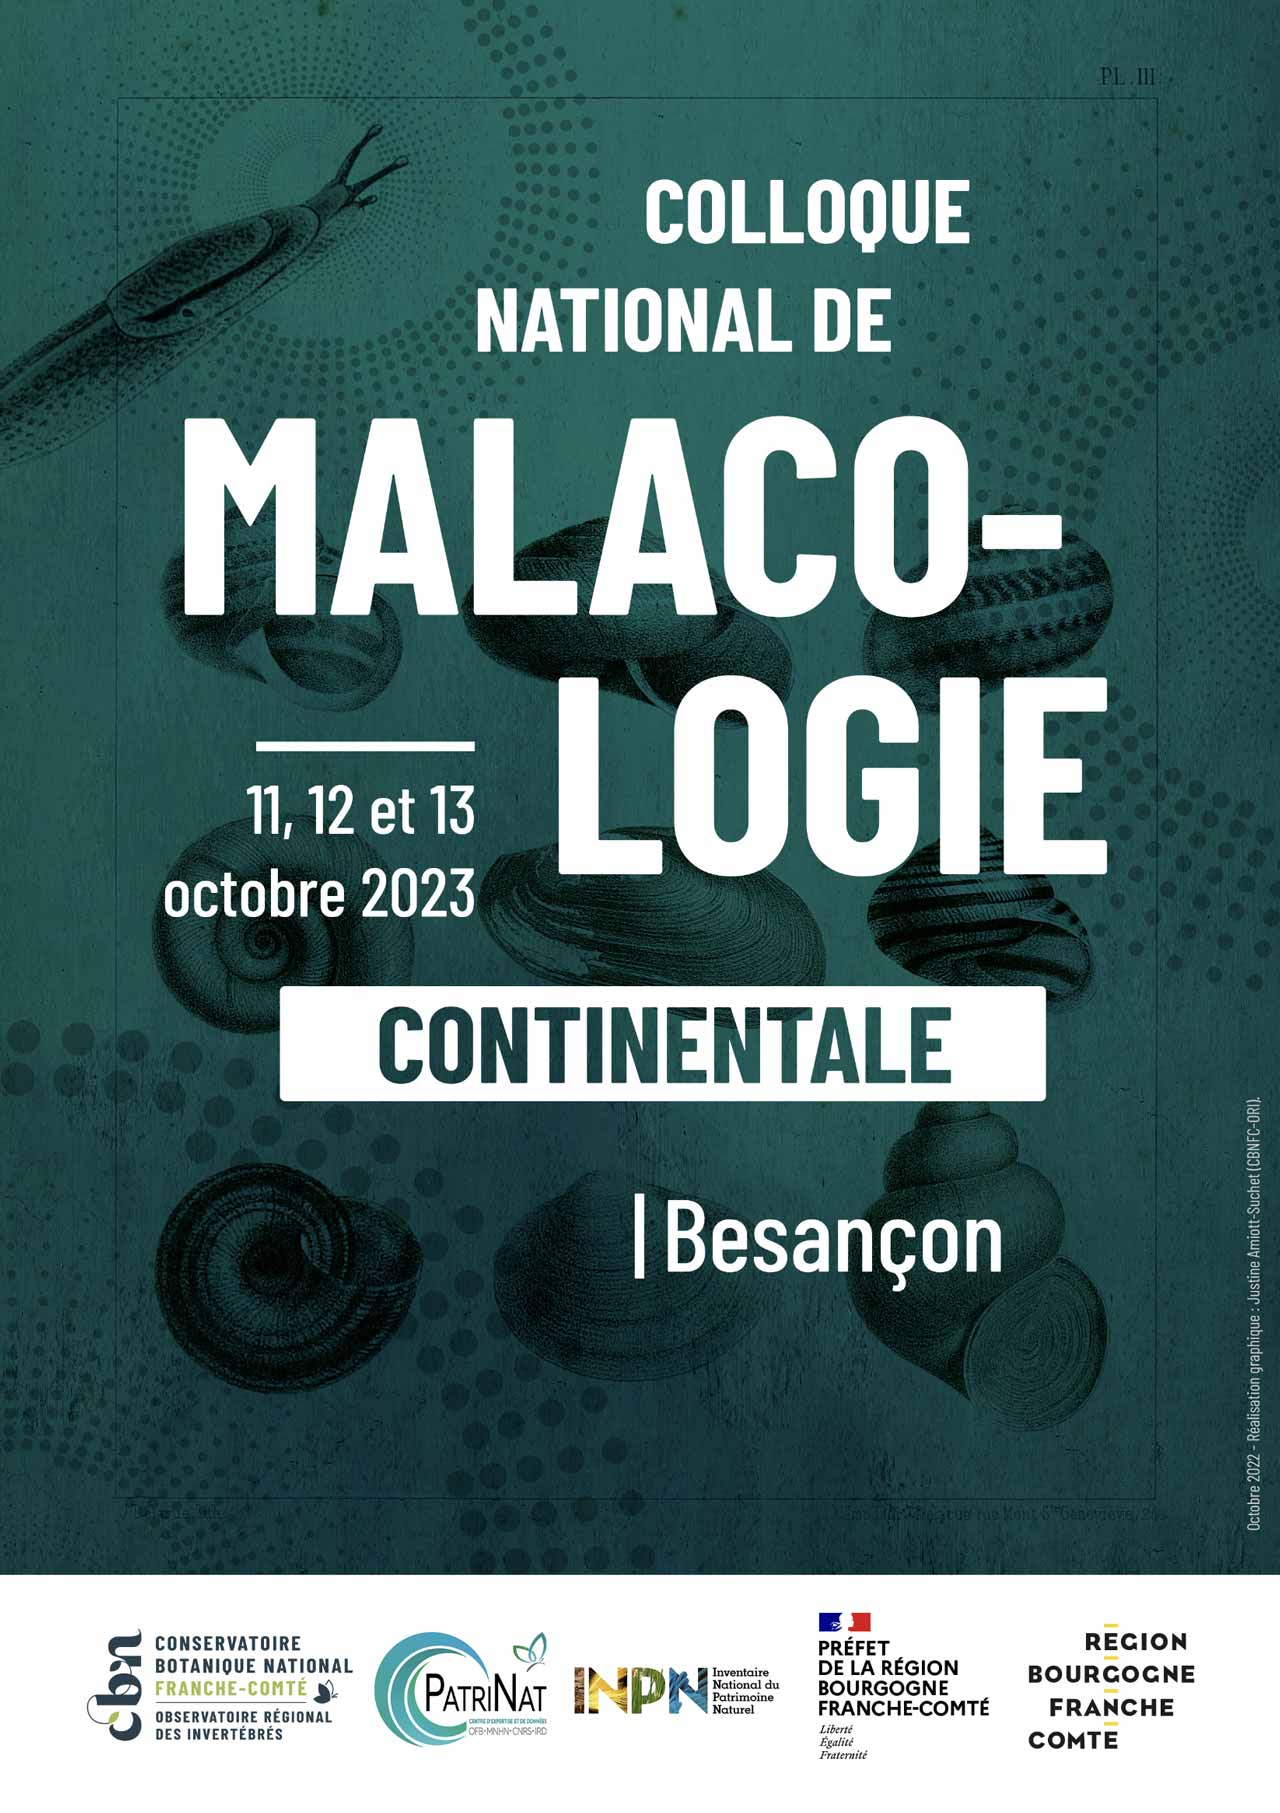 Colloque national de malacologie continentale 2023 Besançon mollusques escargots science